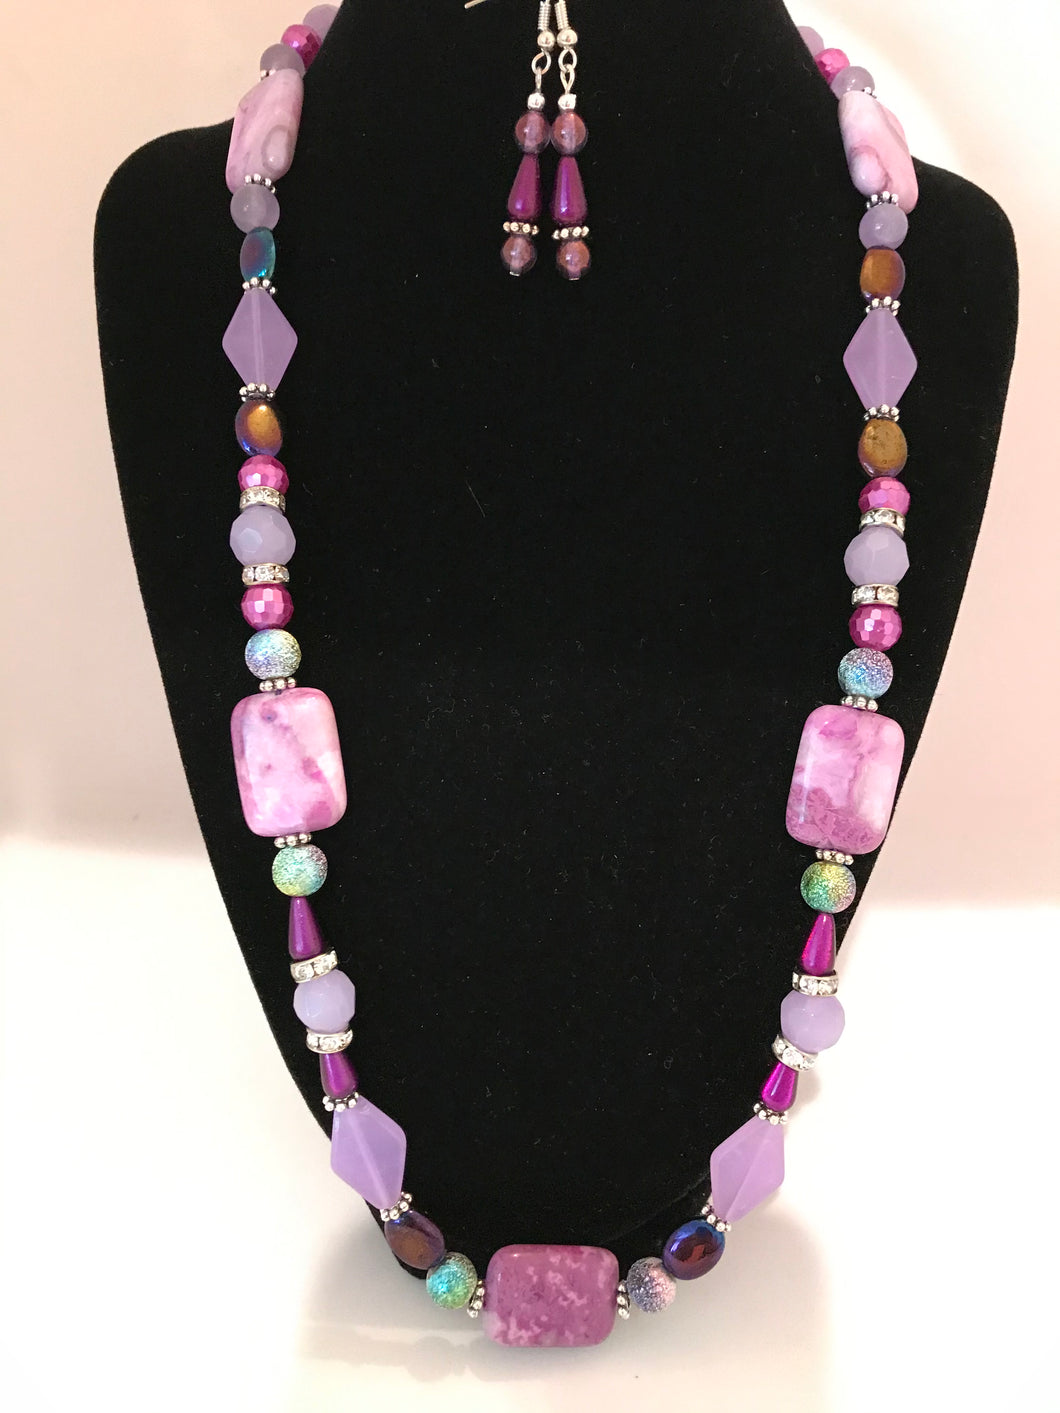 Purple amethyst opal Czech glass flat diamond beaded necklace with coordinated earrings.